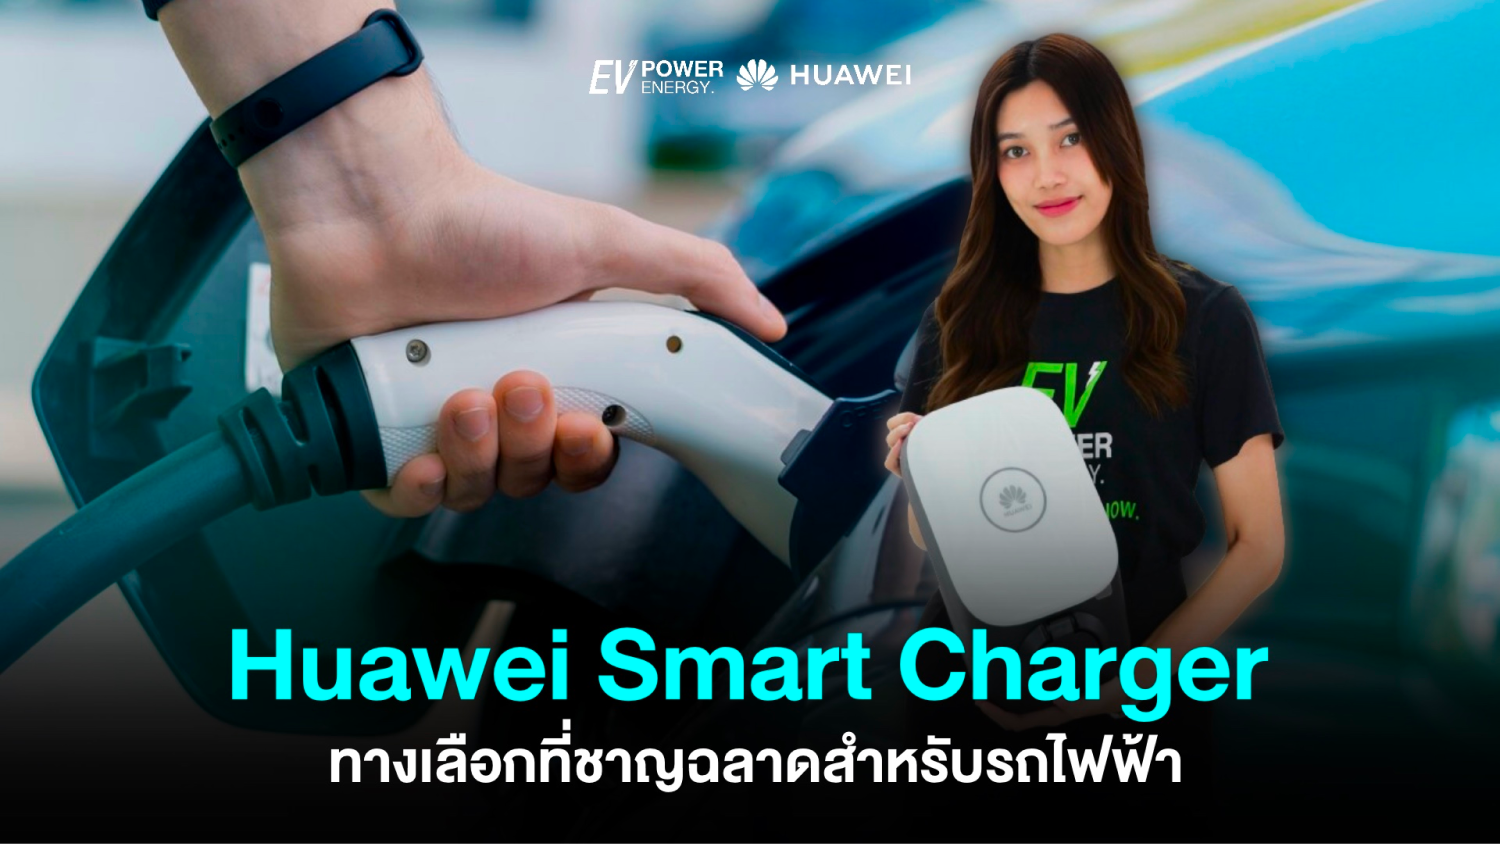 Huawei Smart Charger ทางเลือกสำหรับรถไฟฟ้า